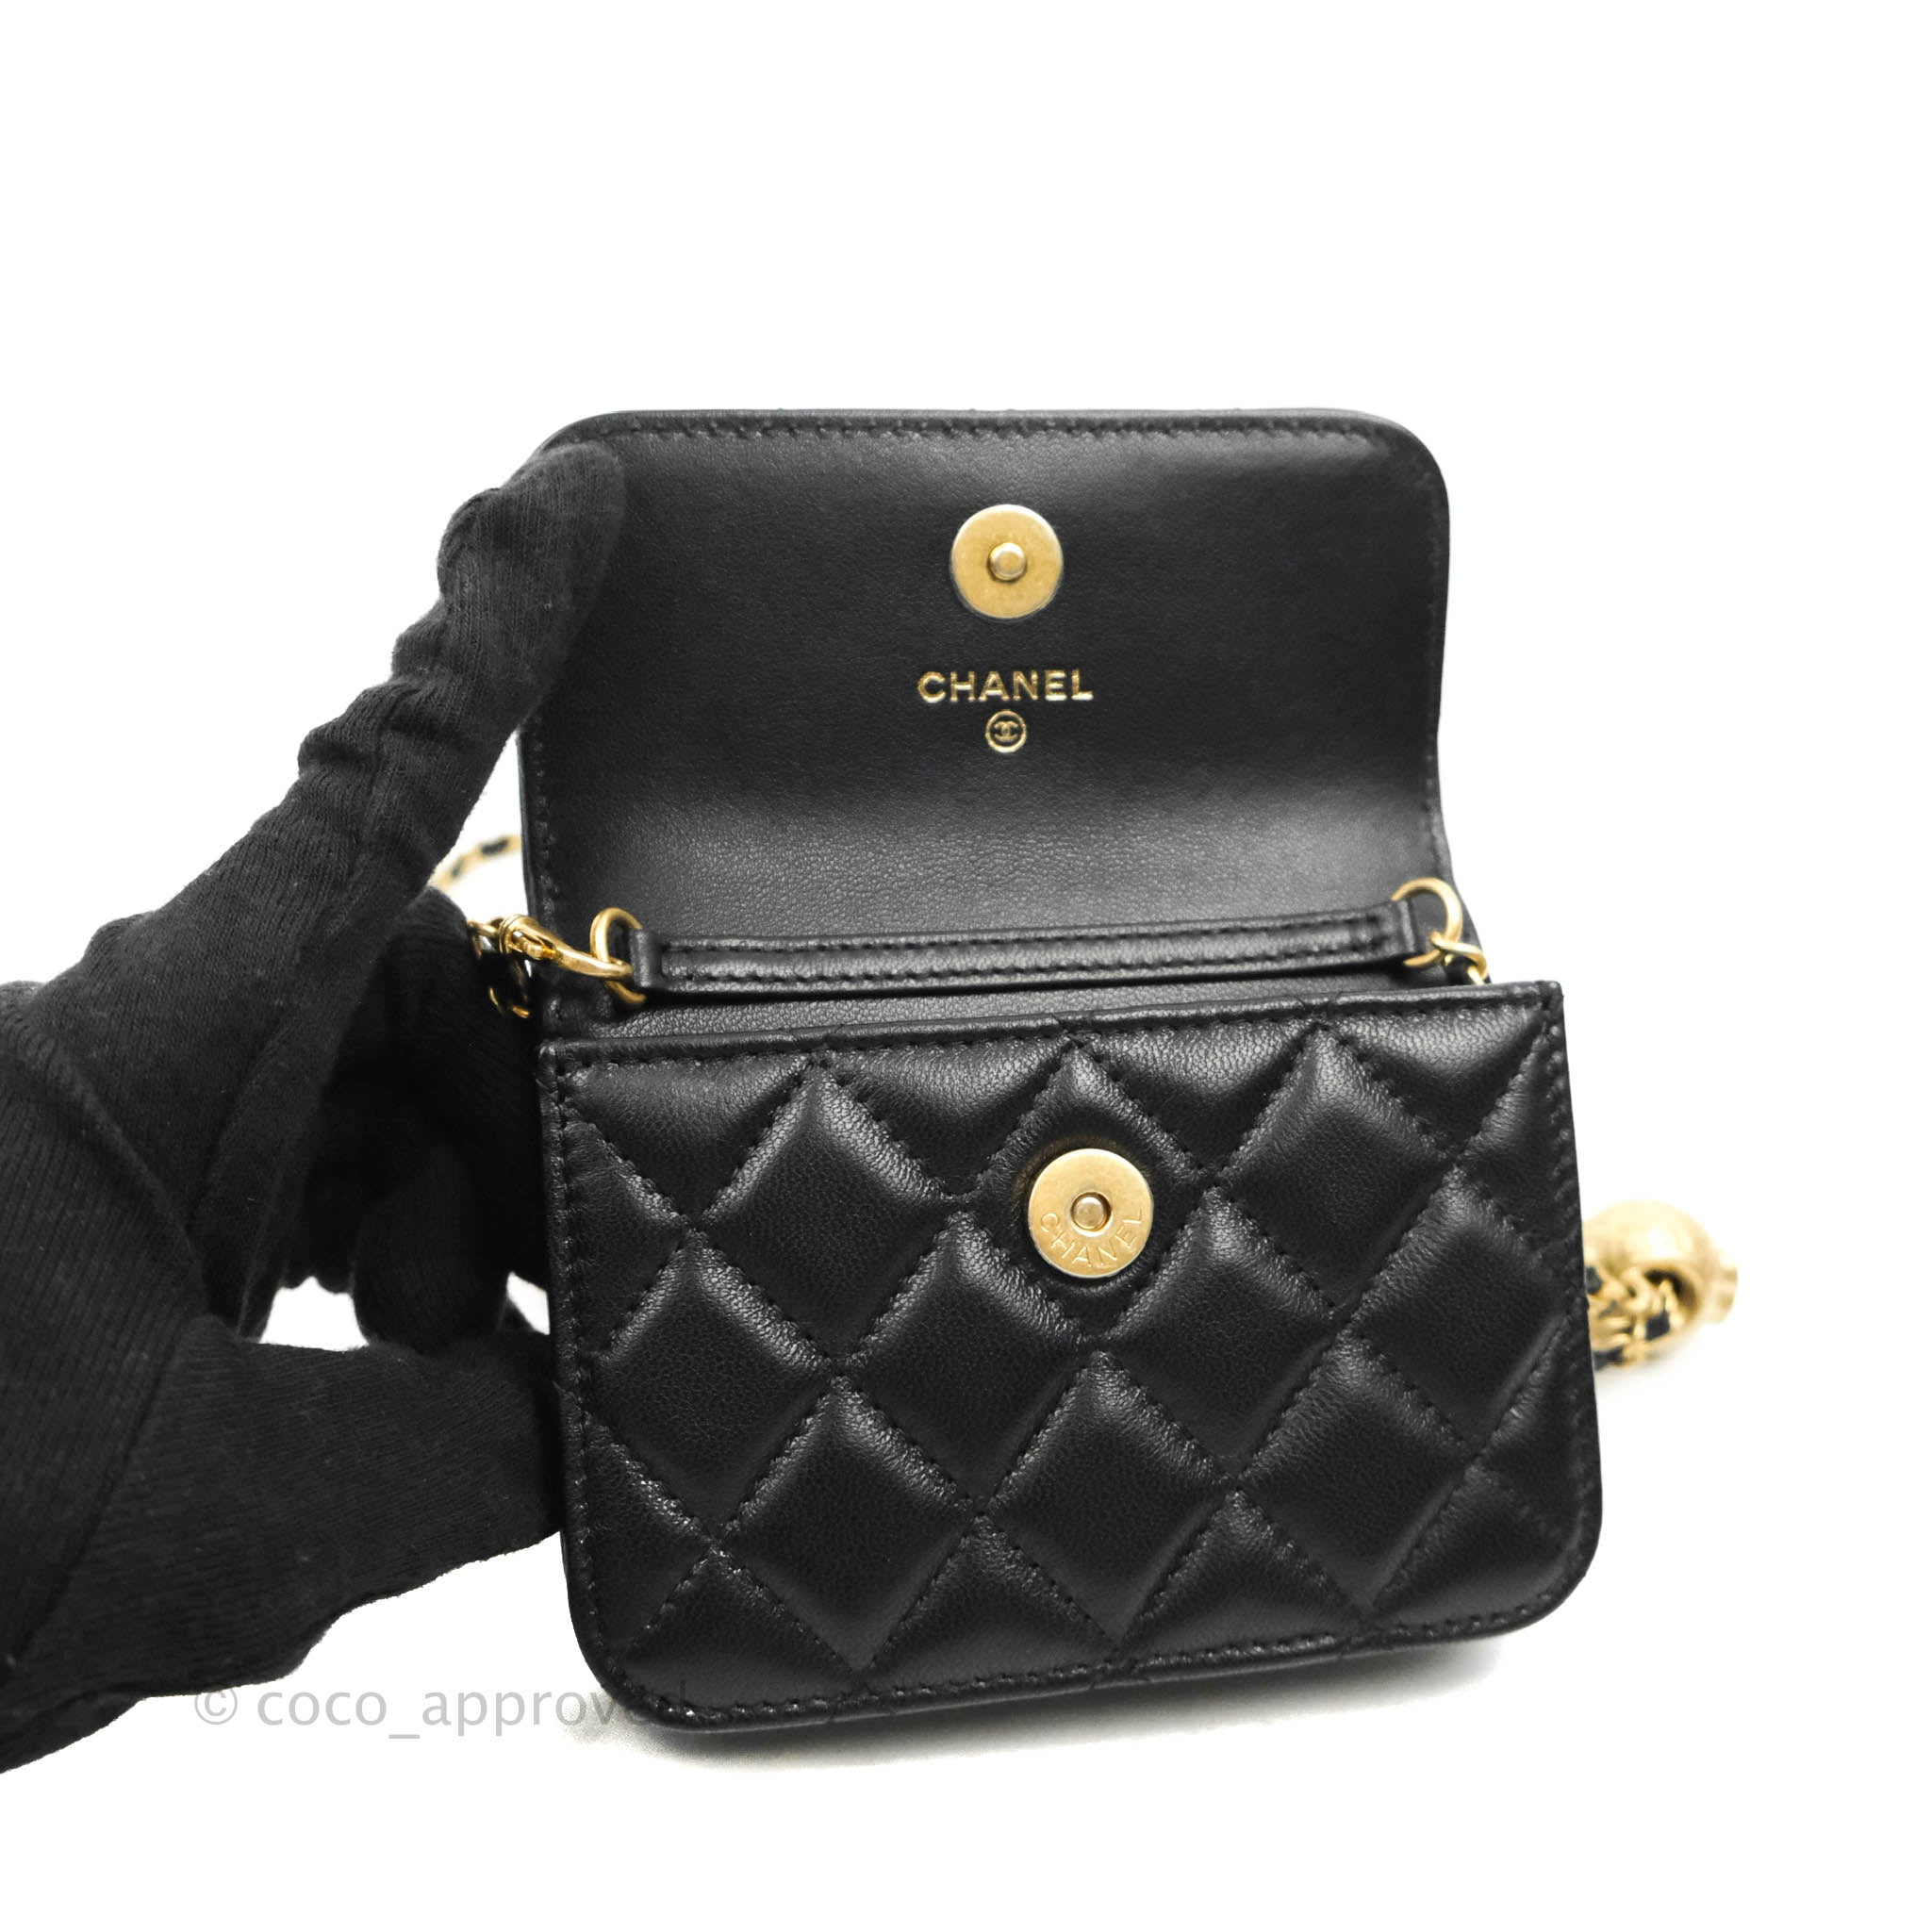 Chanel - Classic Zipped Card Holder - Black Caviar - CGHW